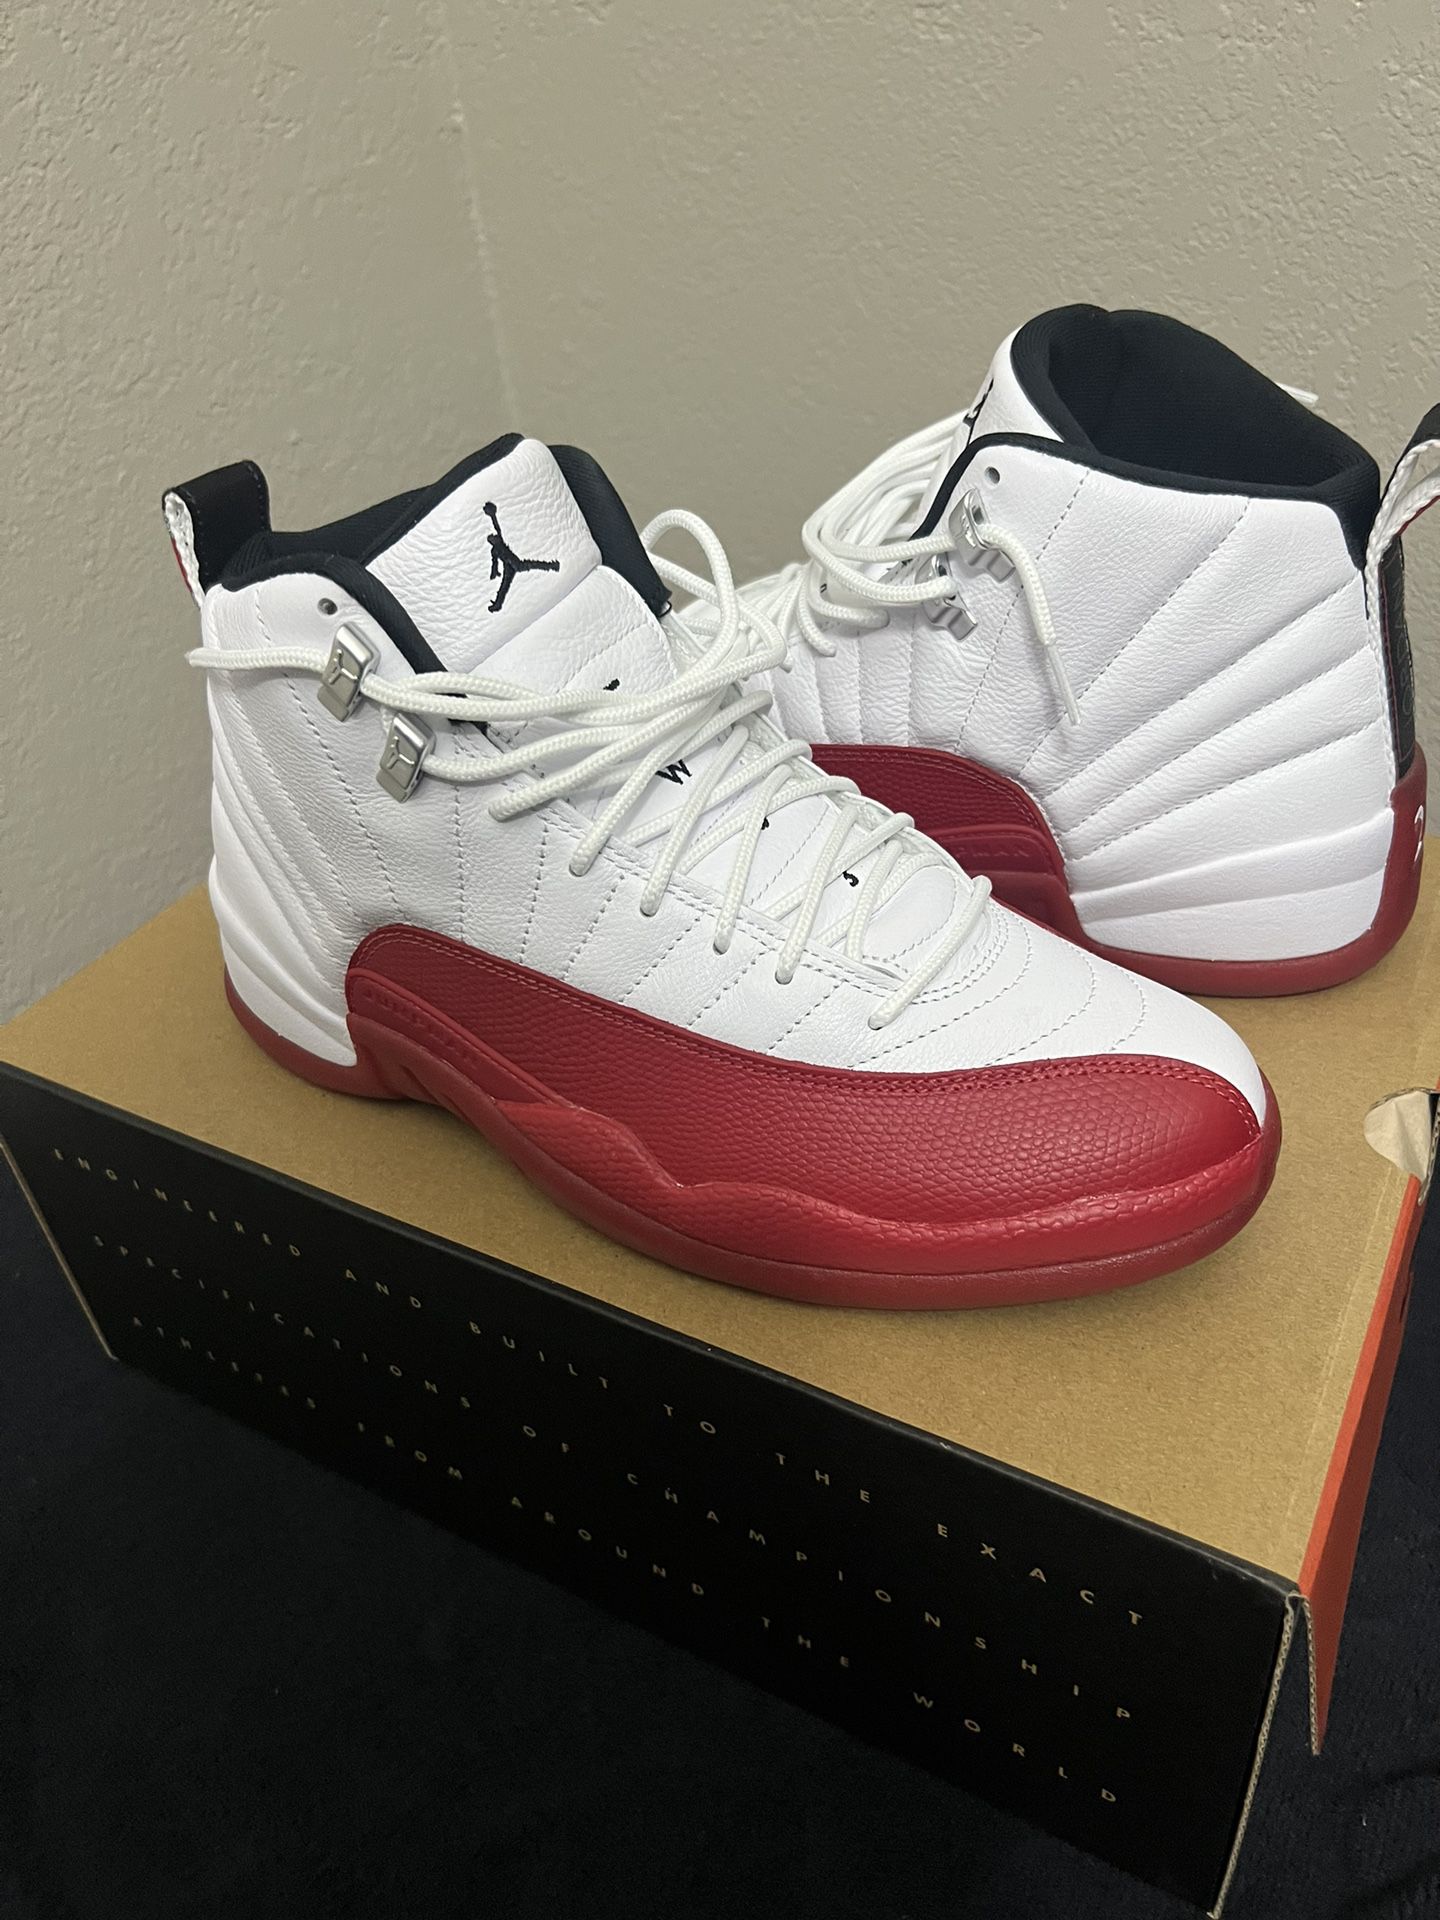 Cherry Red Jordan’s Size 9 $175